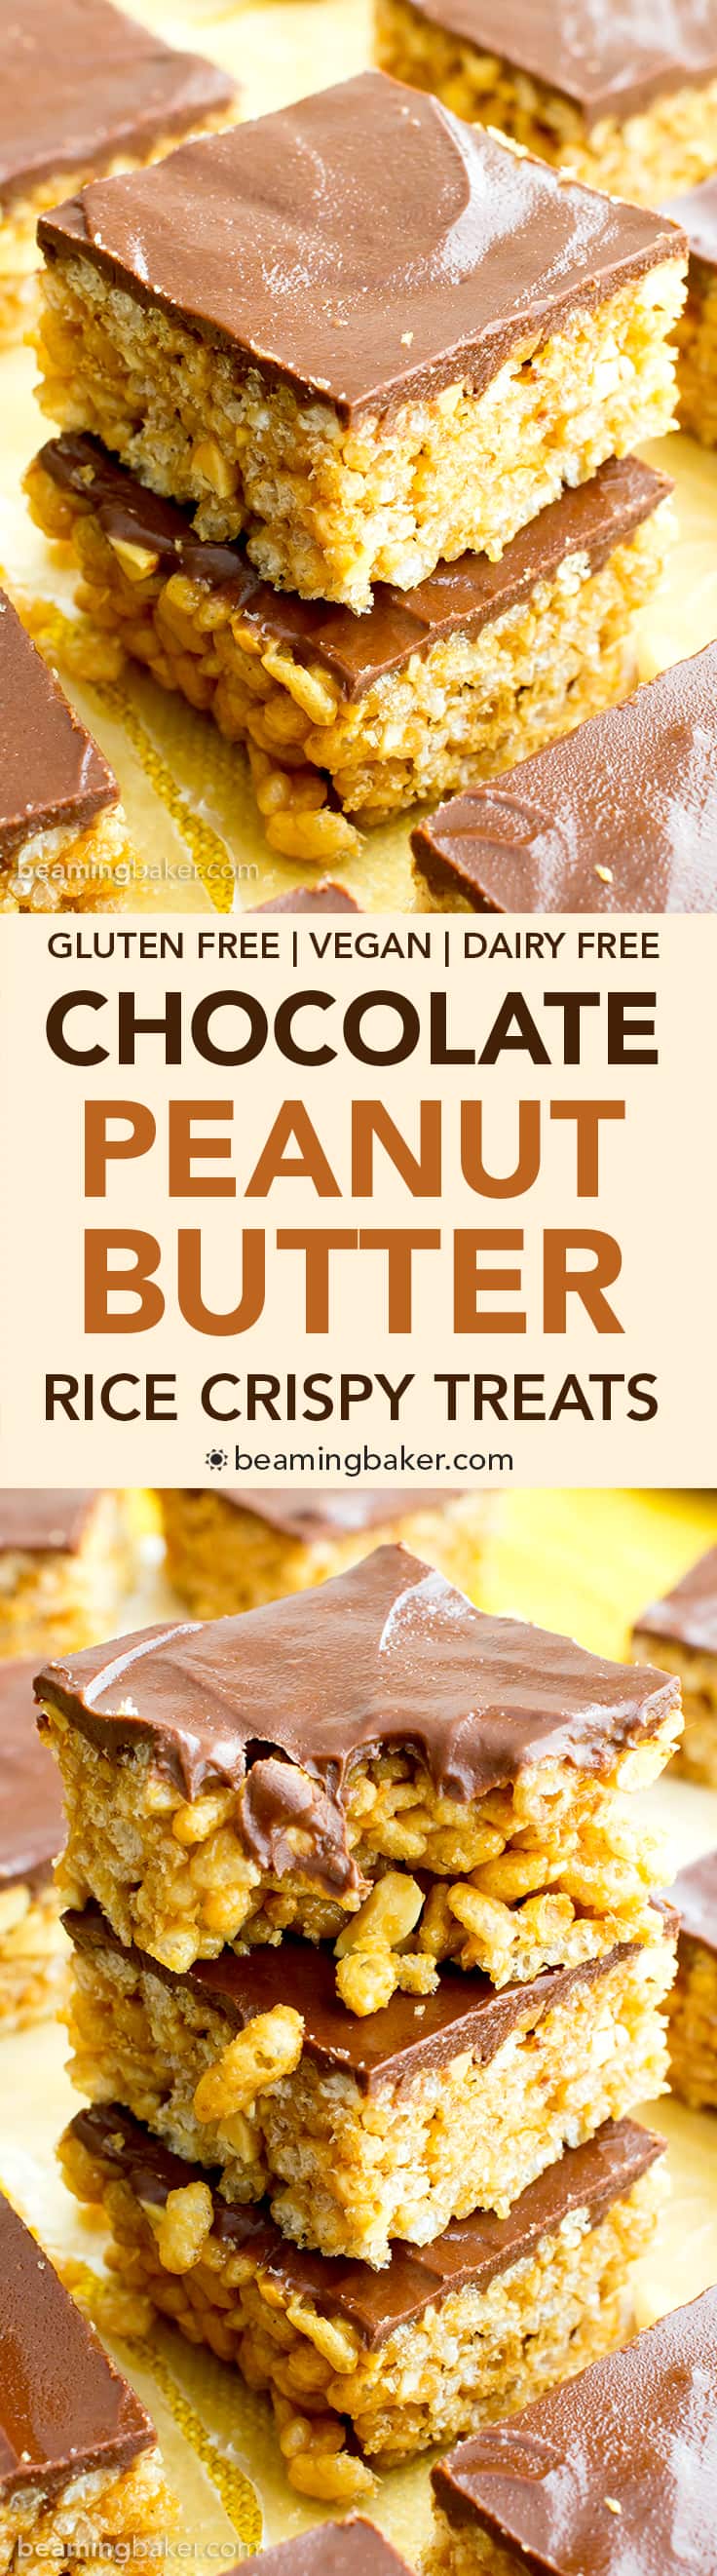 Chocolate Peanut Butter Rice Crispy Treats (V, GF, DF): an easy 5 ingredient recipe for chocolate-topped PB rice crispy treats that taste like peanut butter cups. #Vegan #GlutenFree #DairyFree | BeamingBaker.com